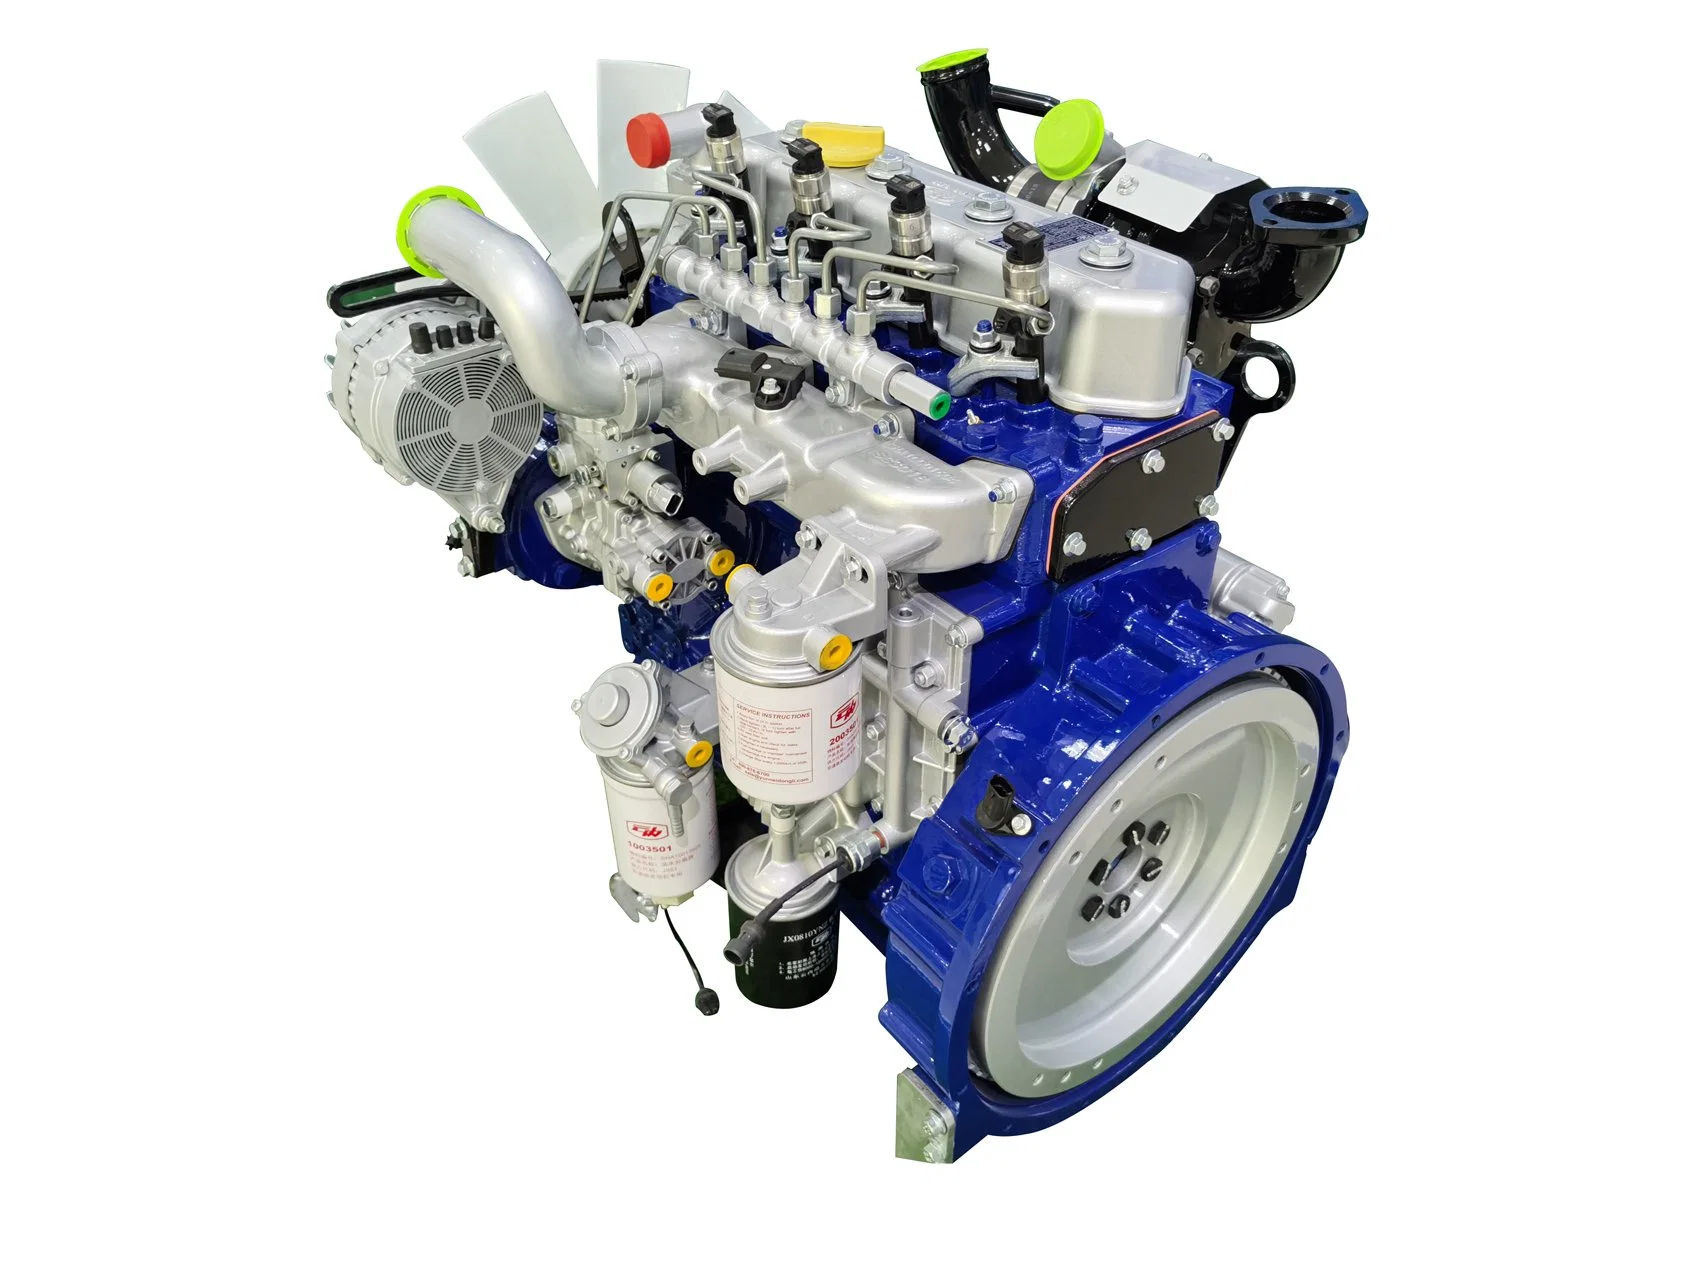 Original Factory Yunnei Power 380 480 490 4102 4108 Diesel Engine for Fire Fighting Pump and 3000rpm Water Pump Diesel Engine